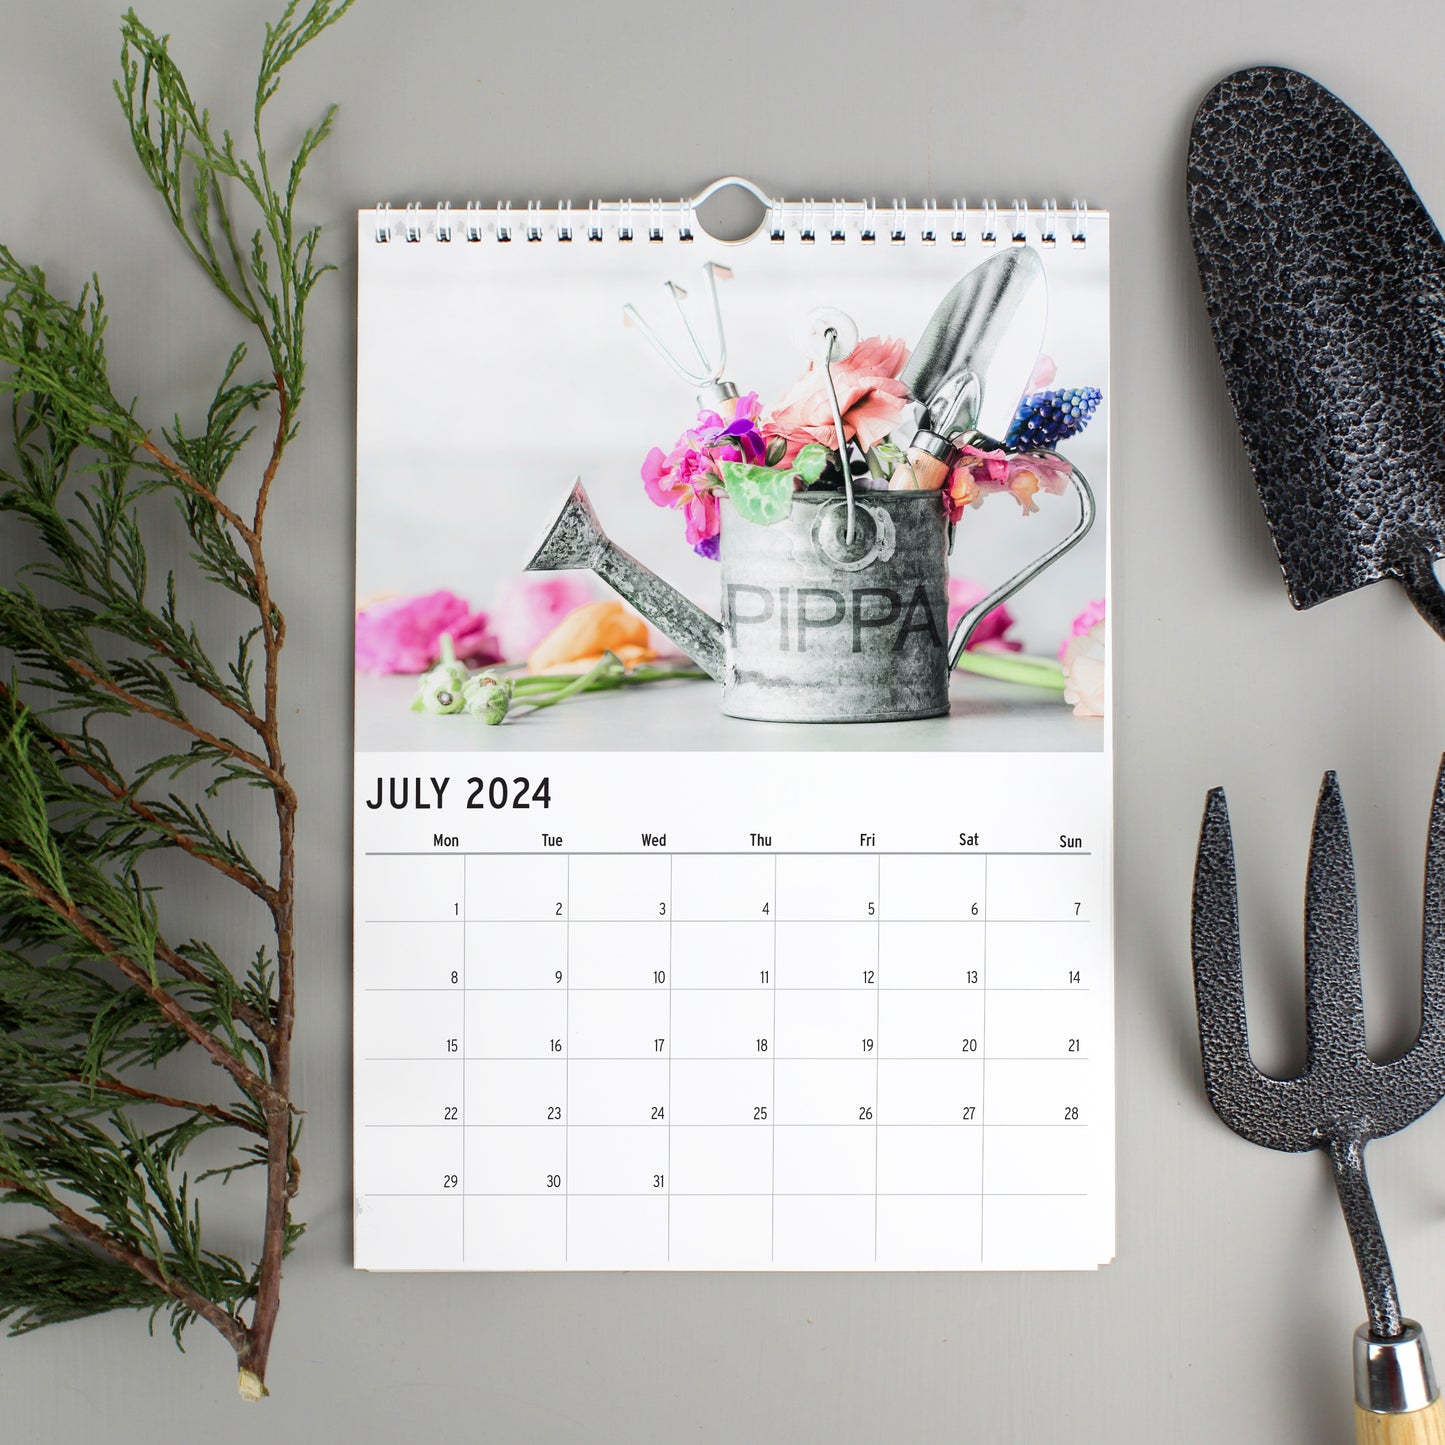 Personalised A4 Gardening Calendar - Personalise It!